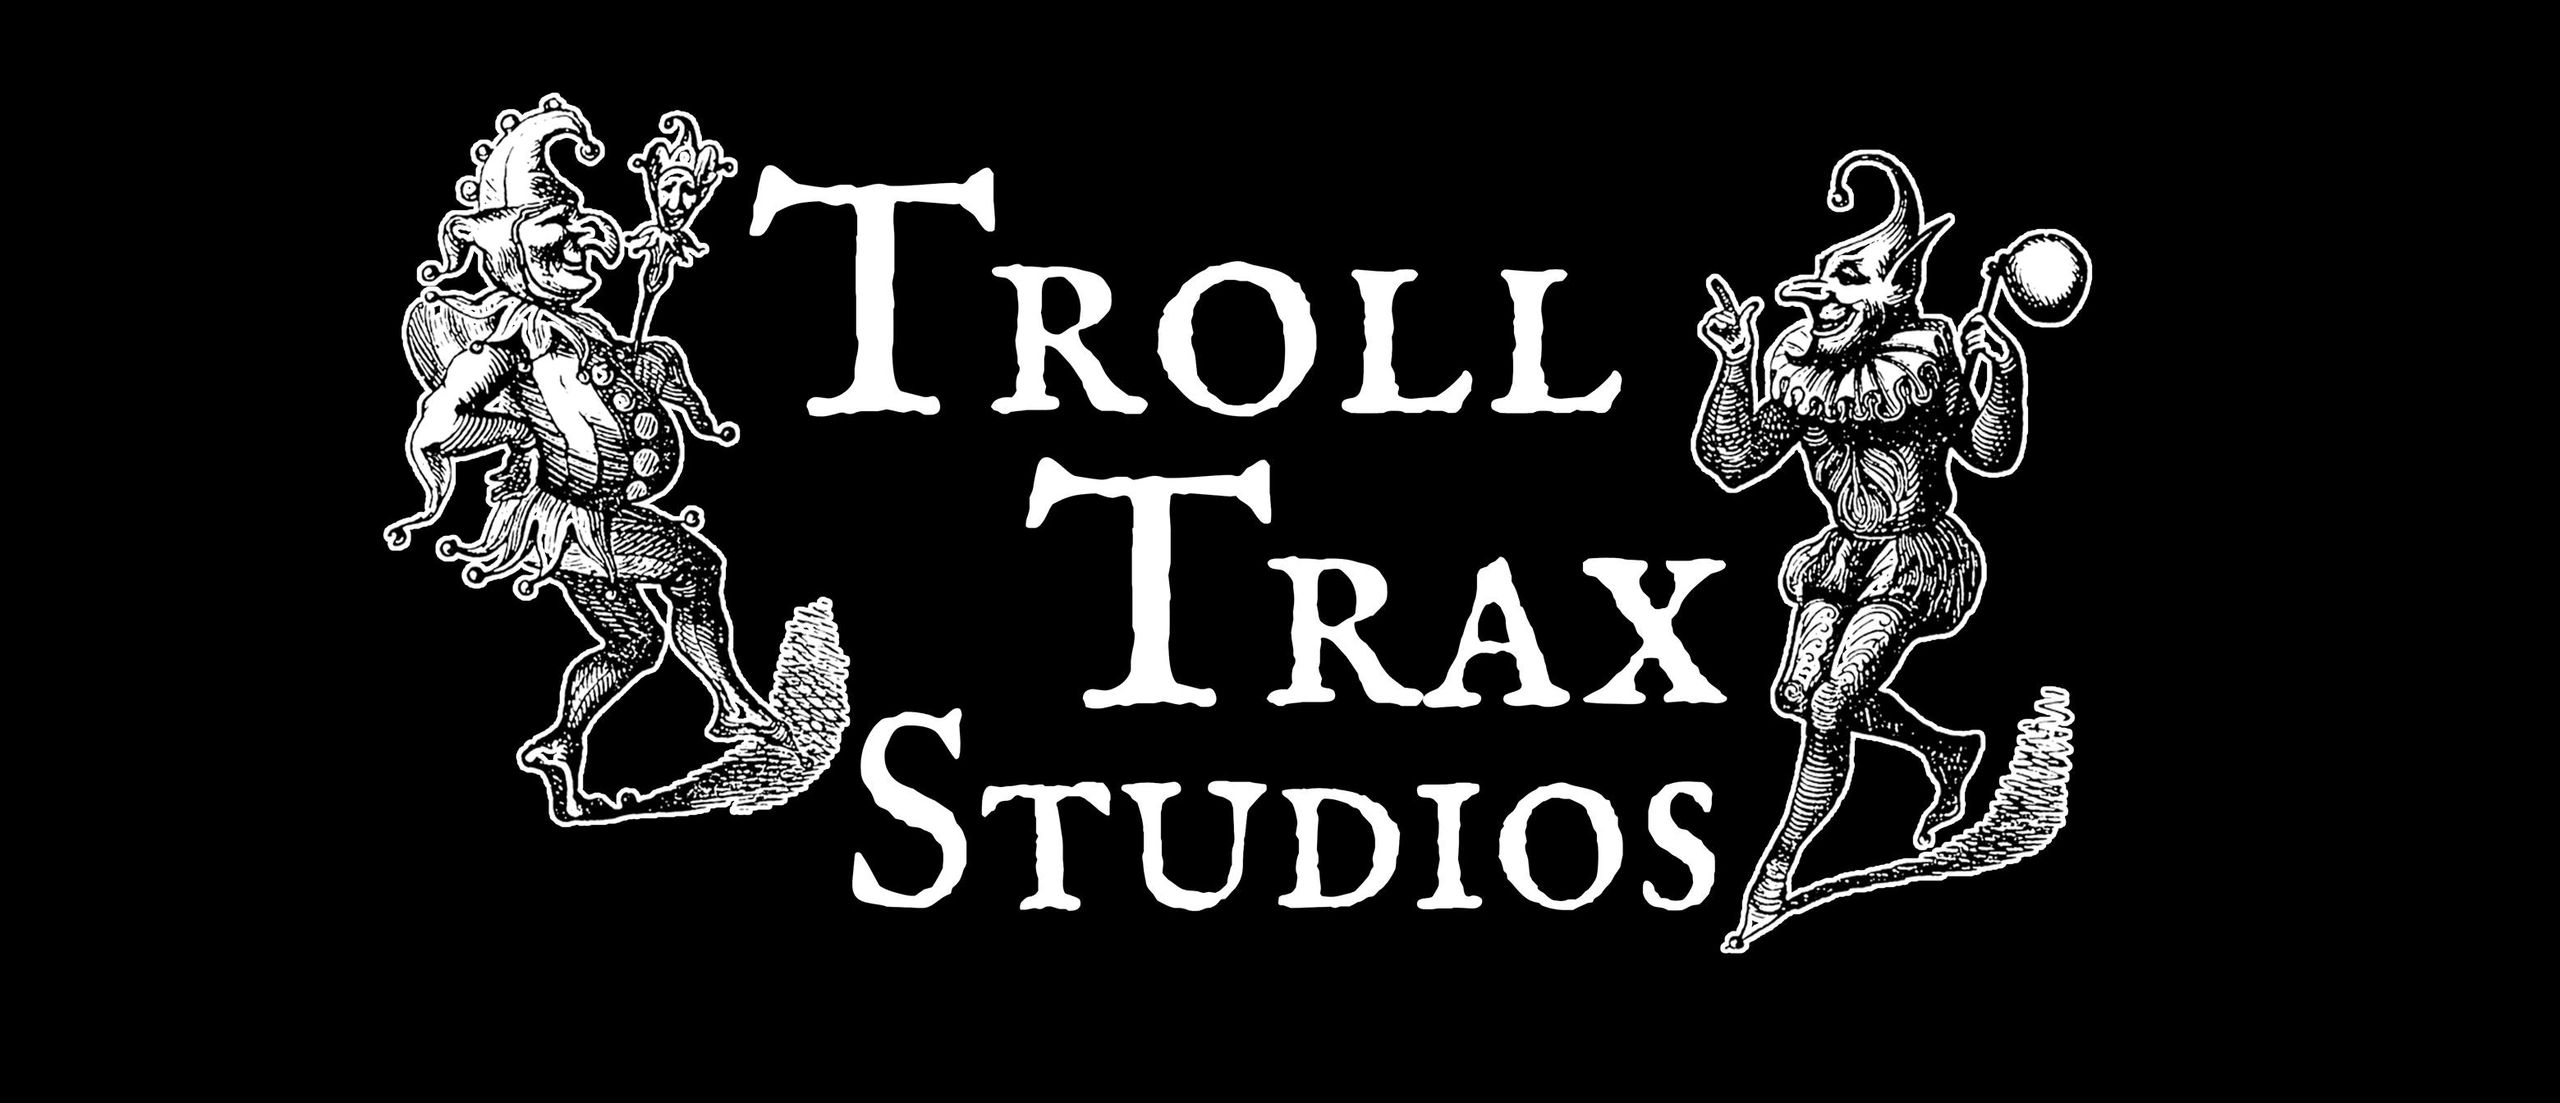 troll trax studios death metal record label logo